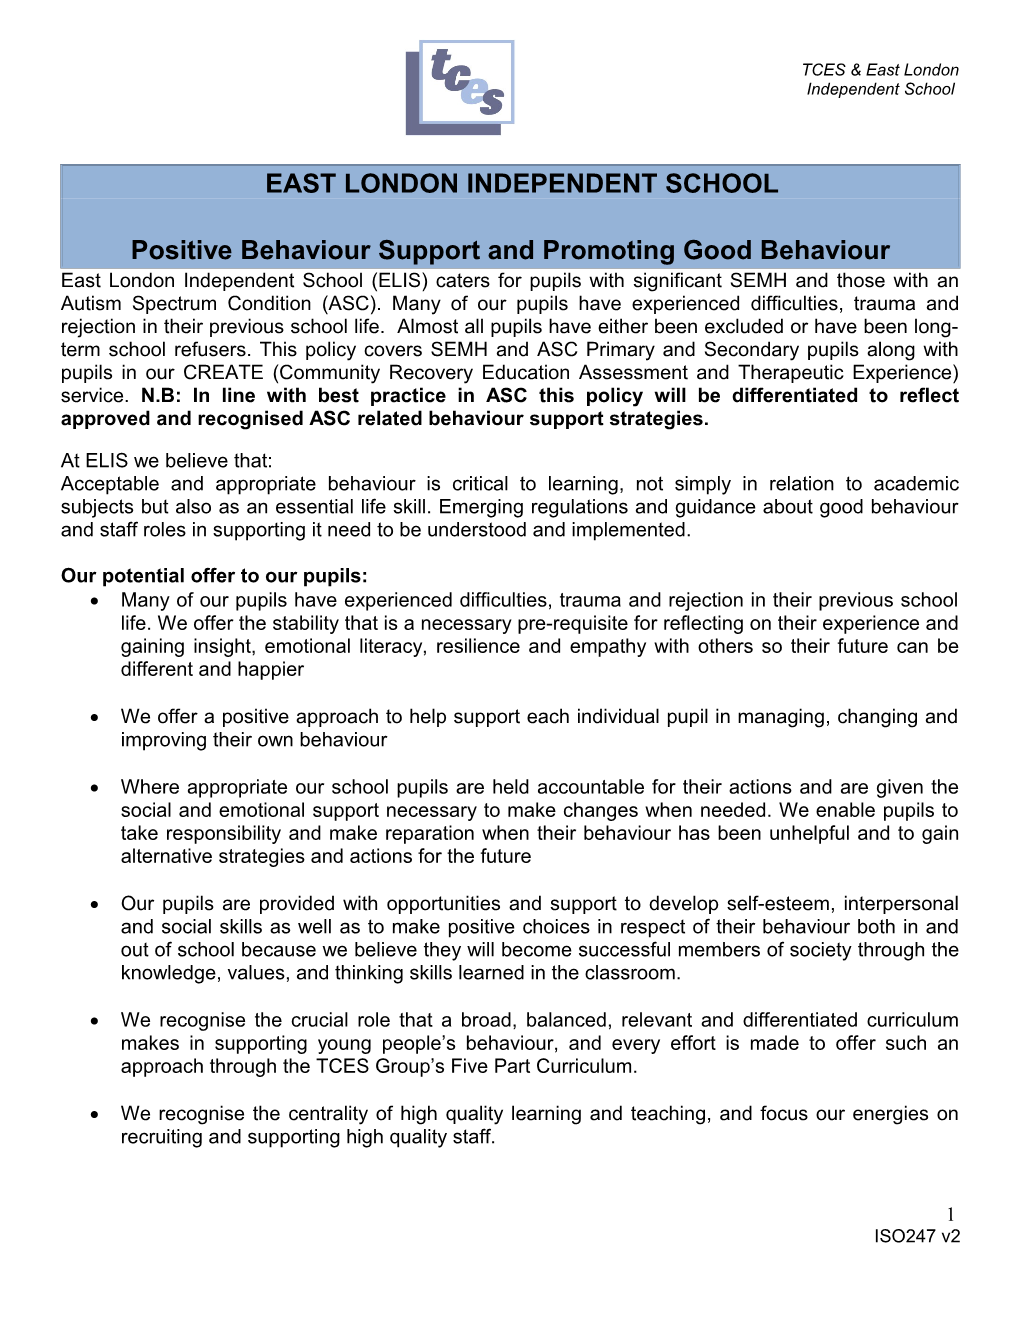 EAST LONDON Independent School